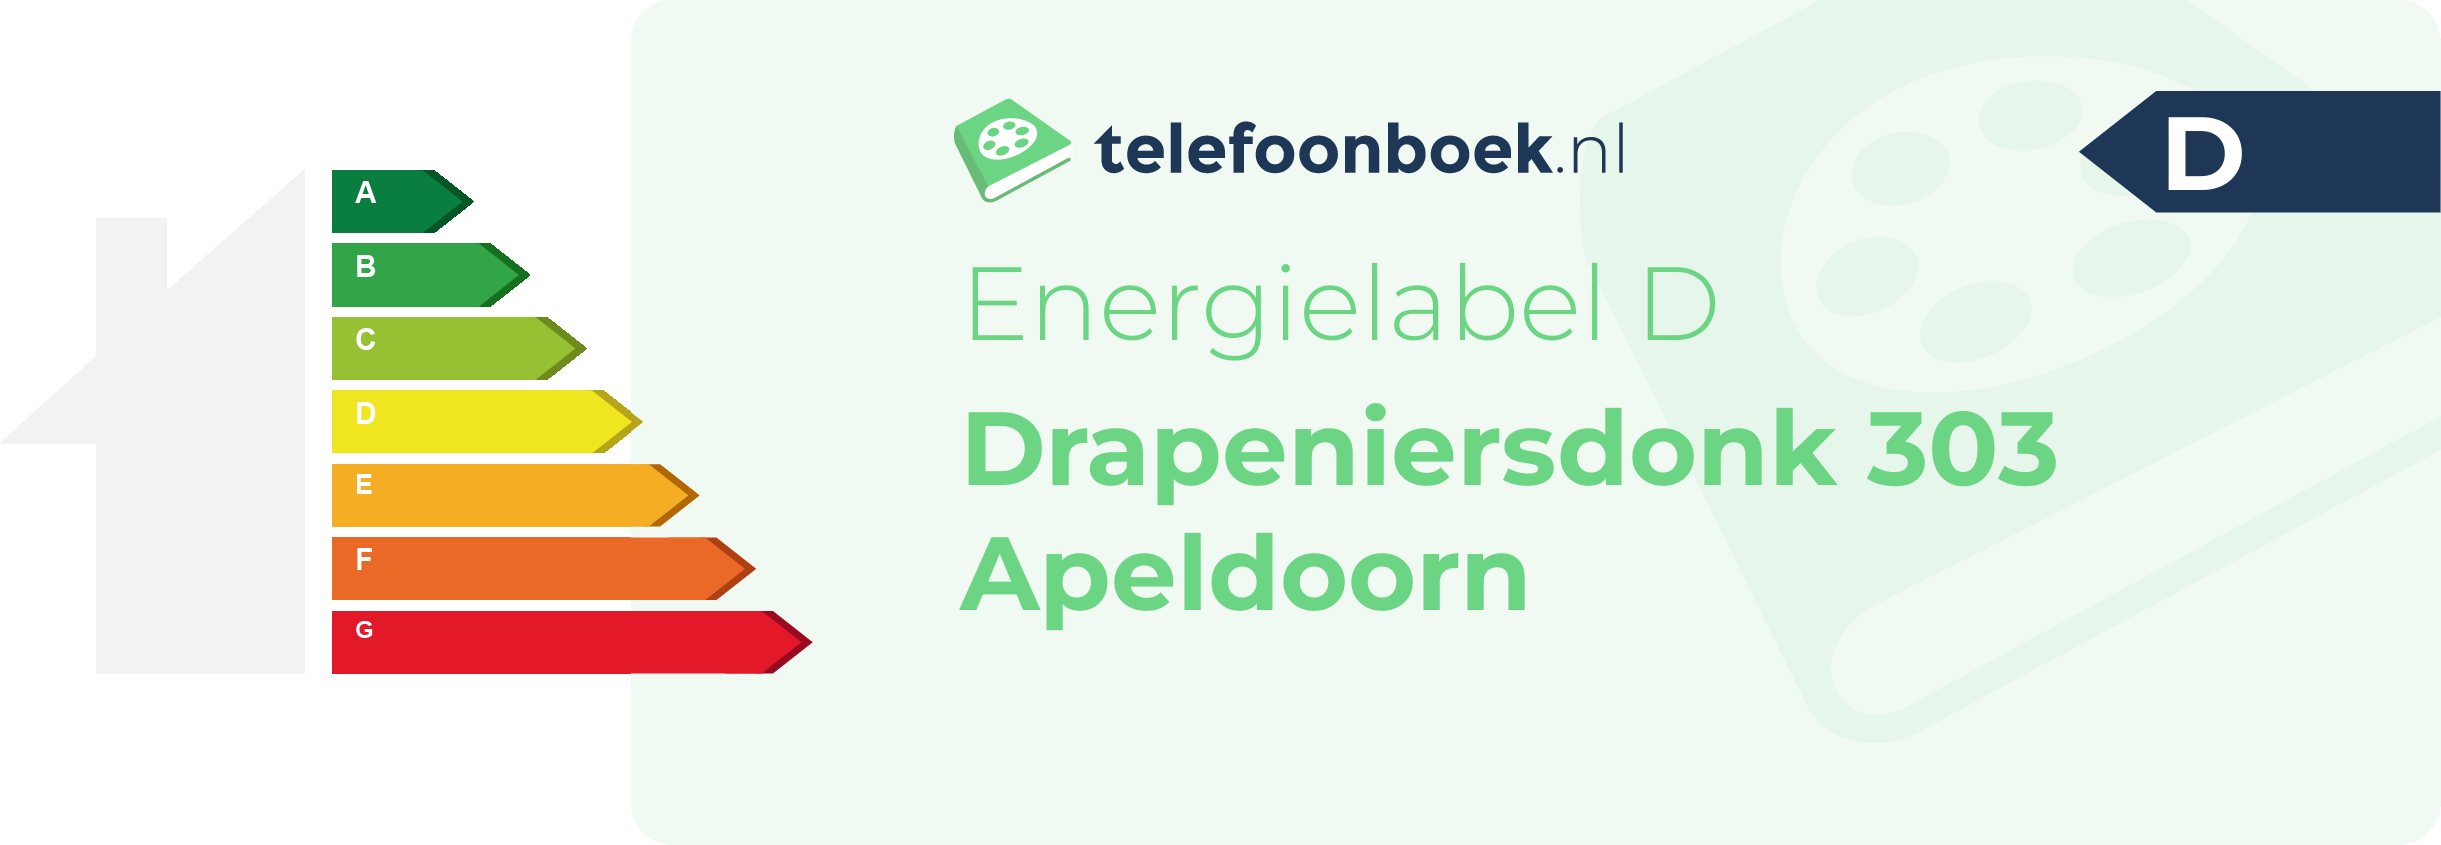 Energielabel Drapeniersdonk 303 Apeldoorn